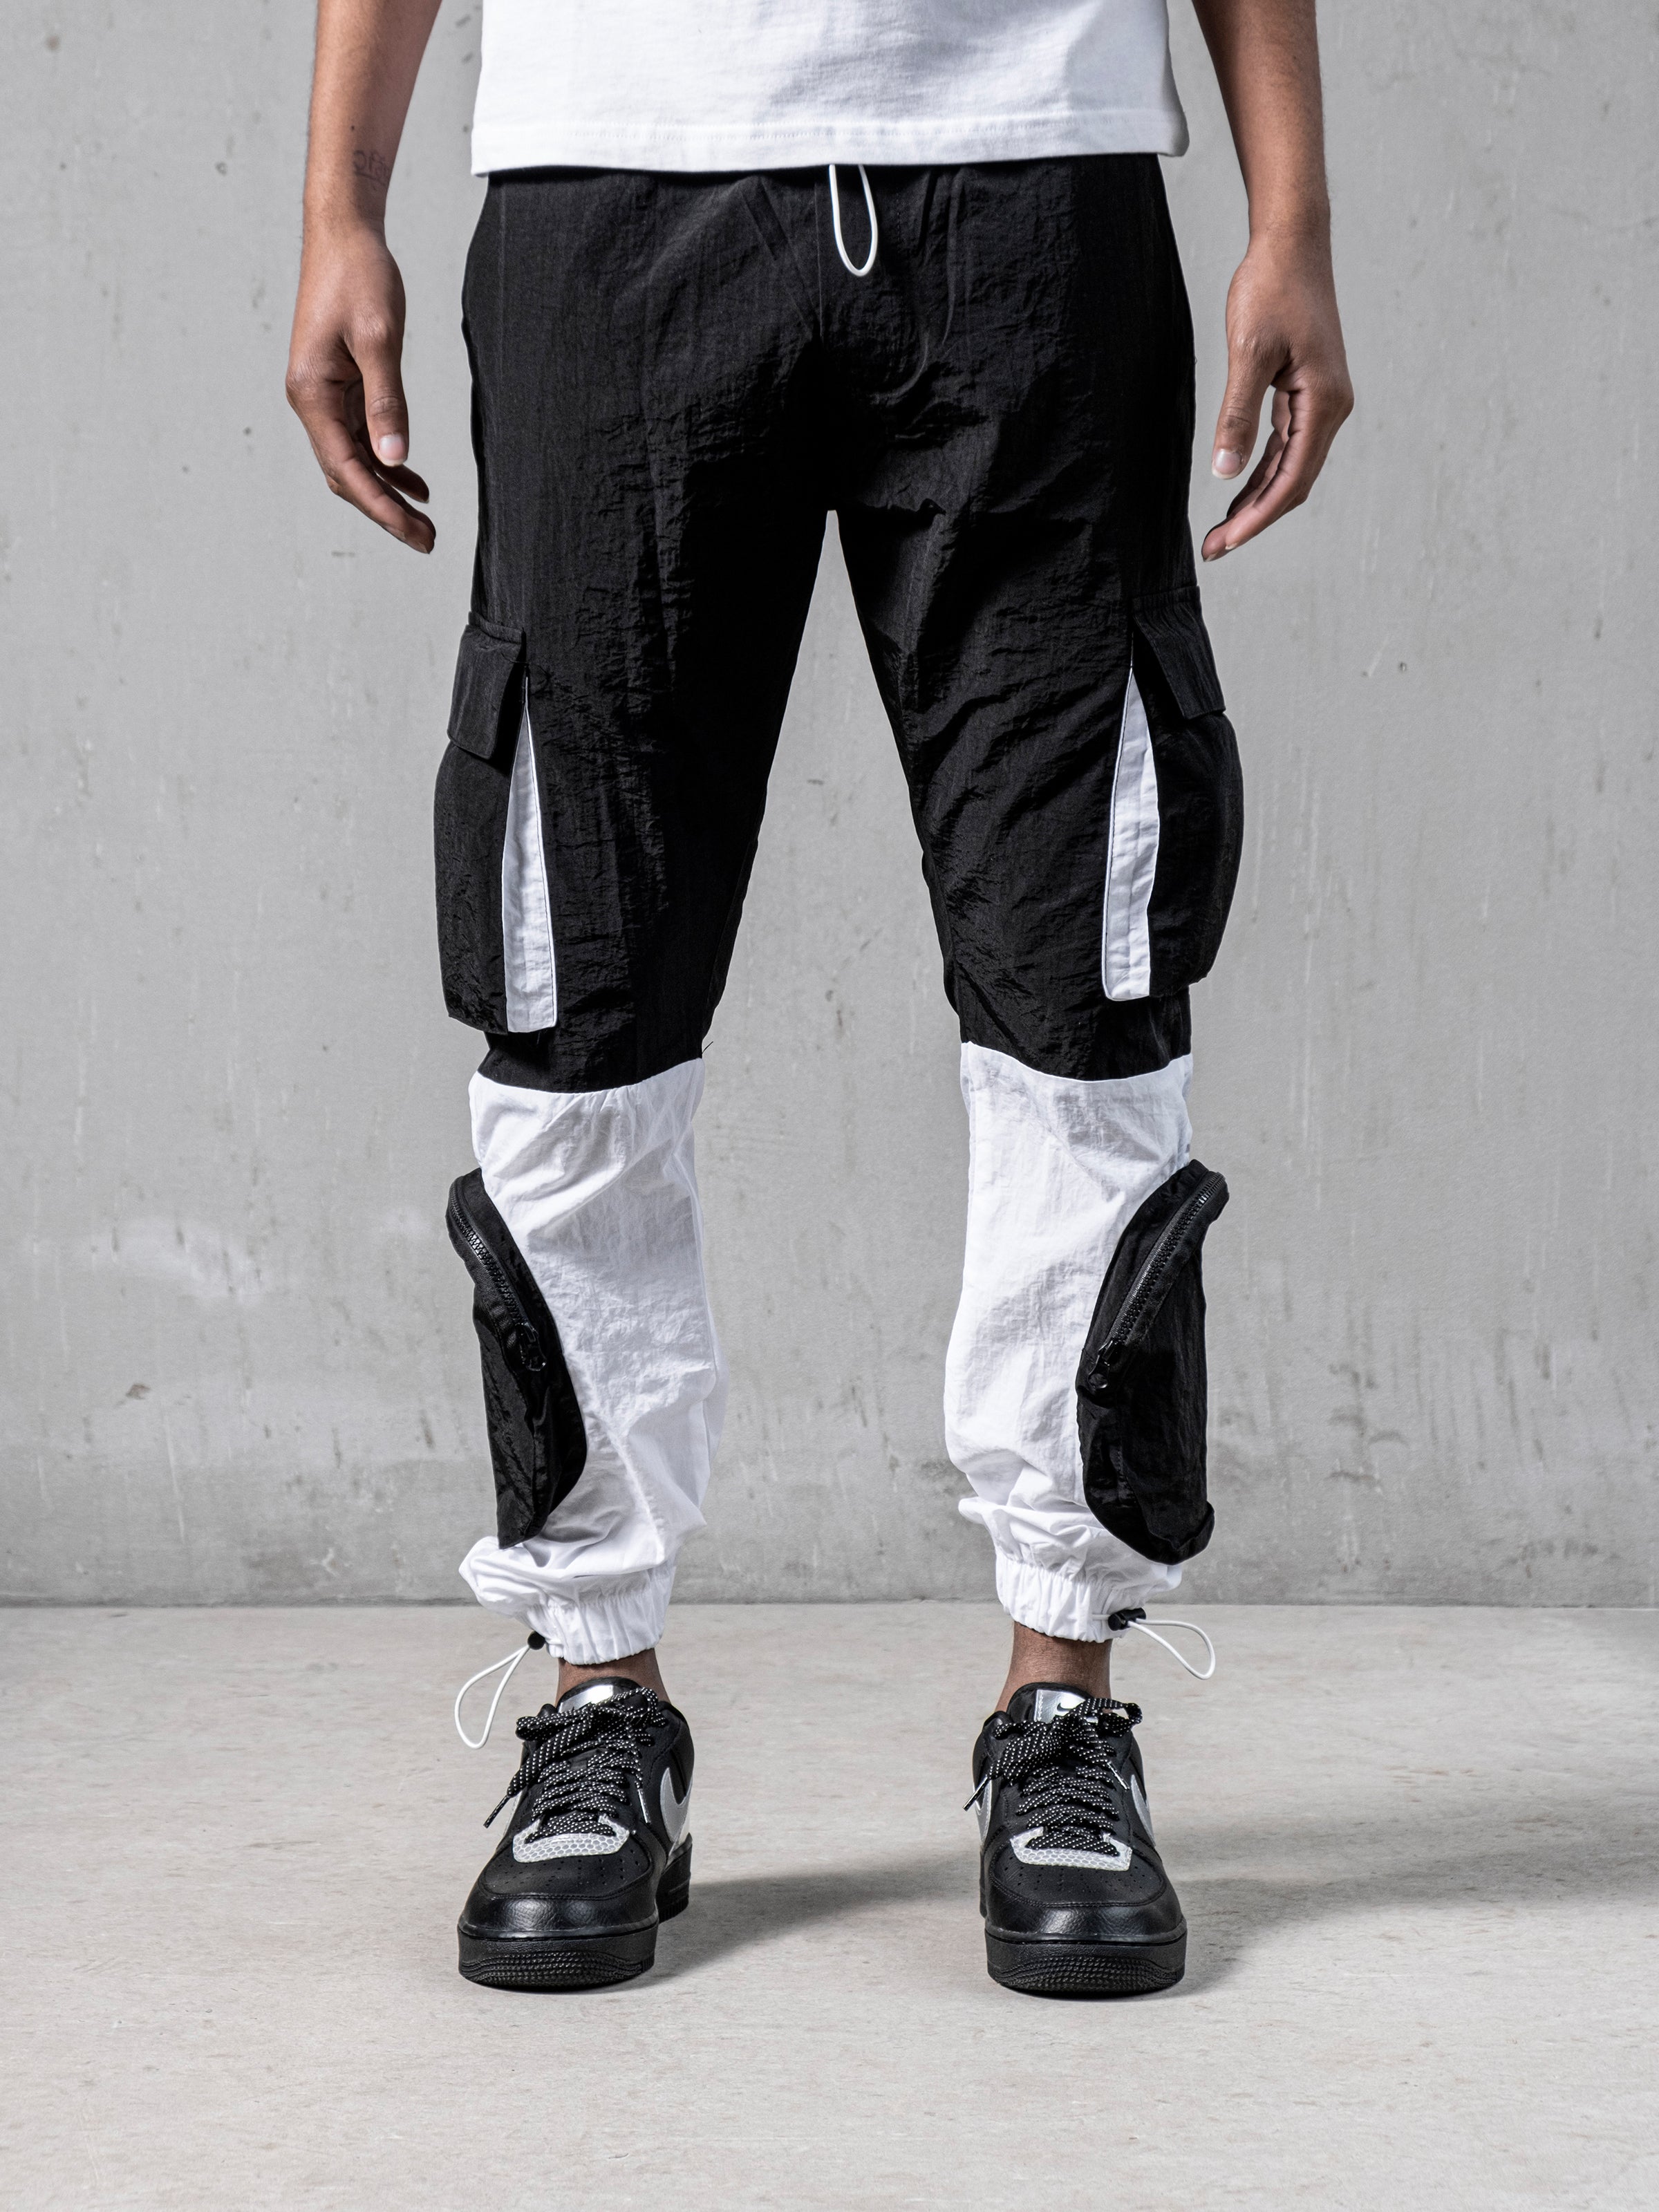 Black and White Parachute Cargos | Men's Streetwear Pants | Monocloth ...